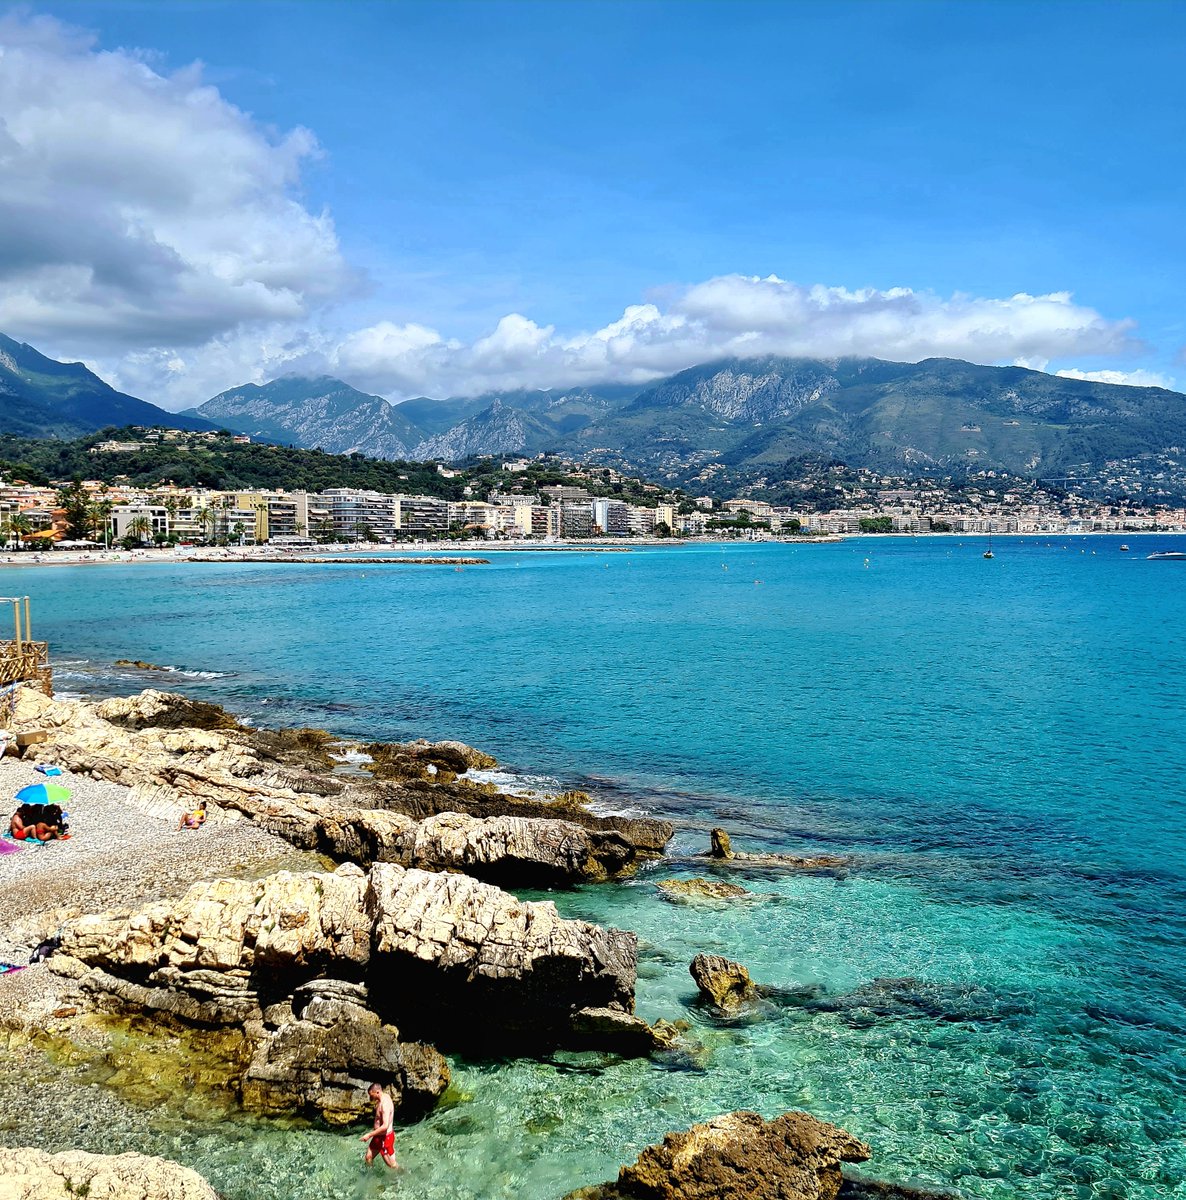 Bonne baignade ! #RoquebruneCapMartin #Rivierafrançaise #CotedAzurFrance #AlpesMaritimes #RegionSud